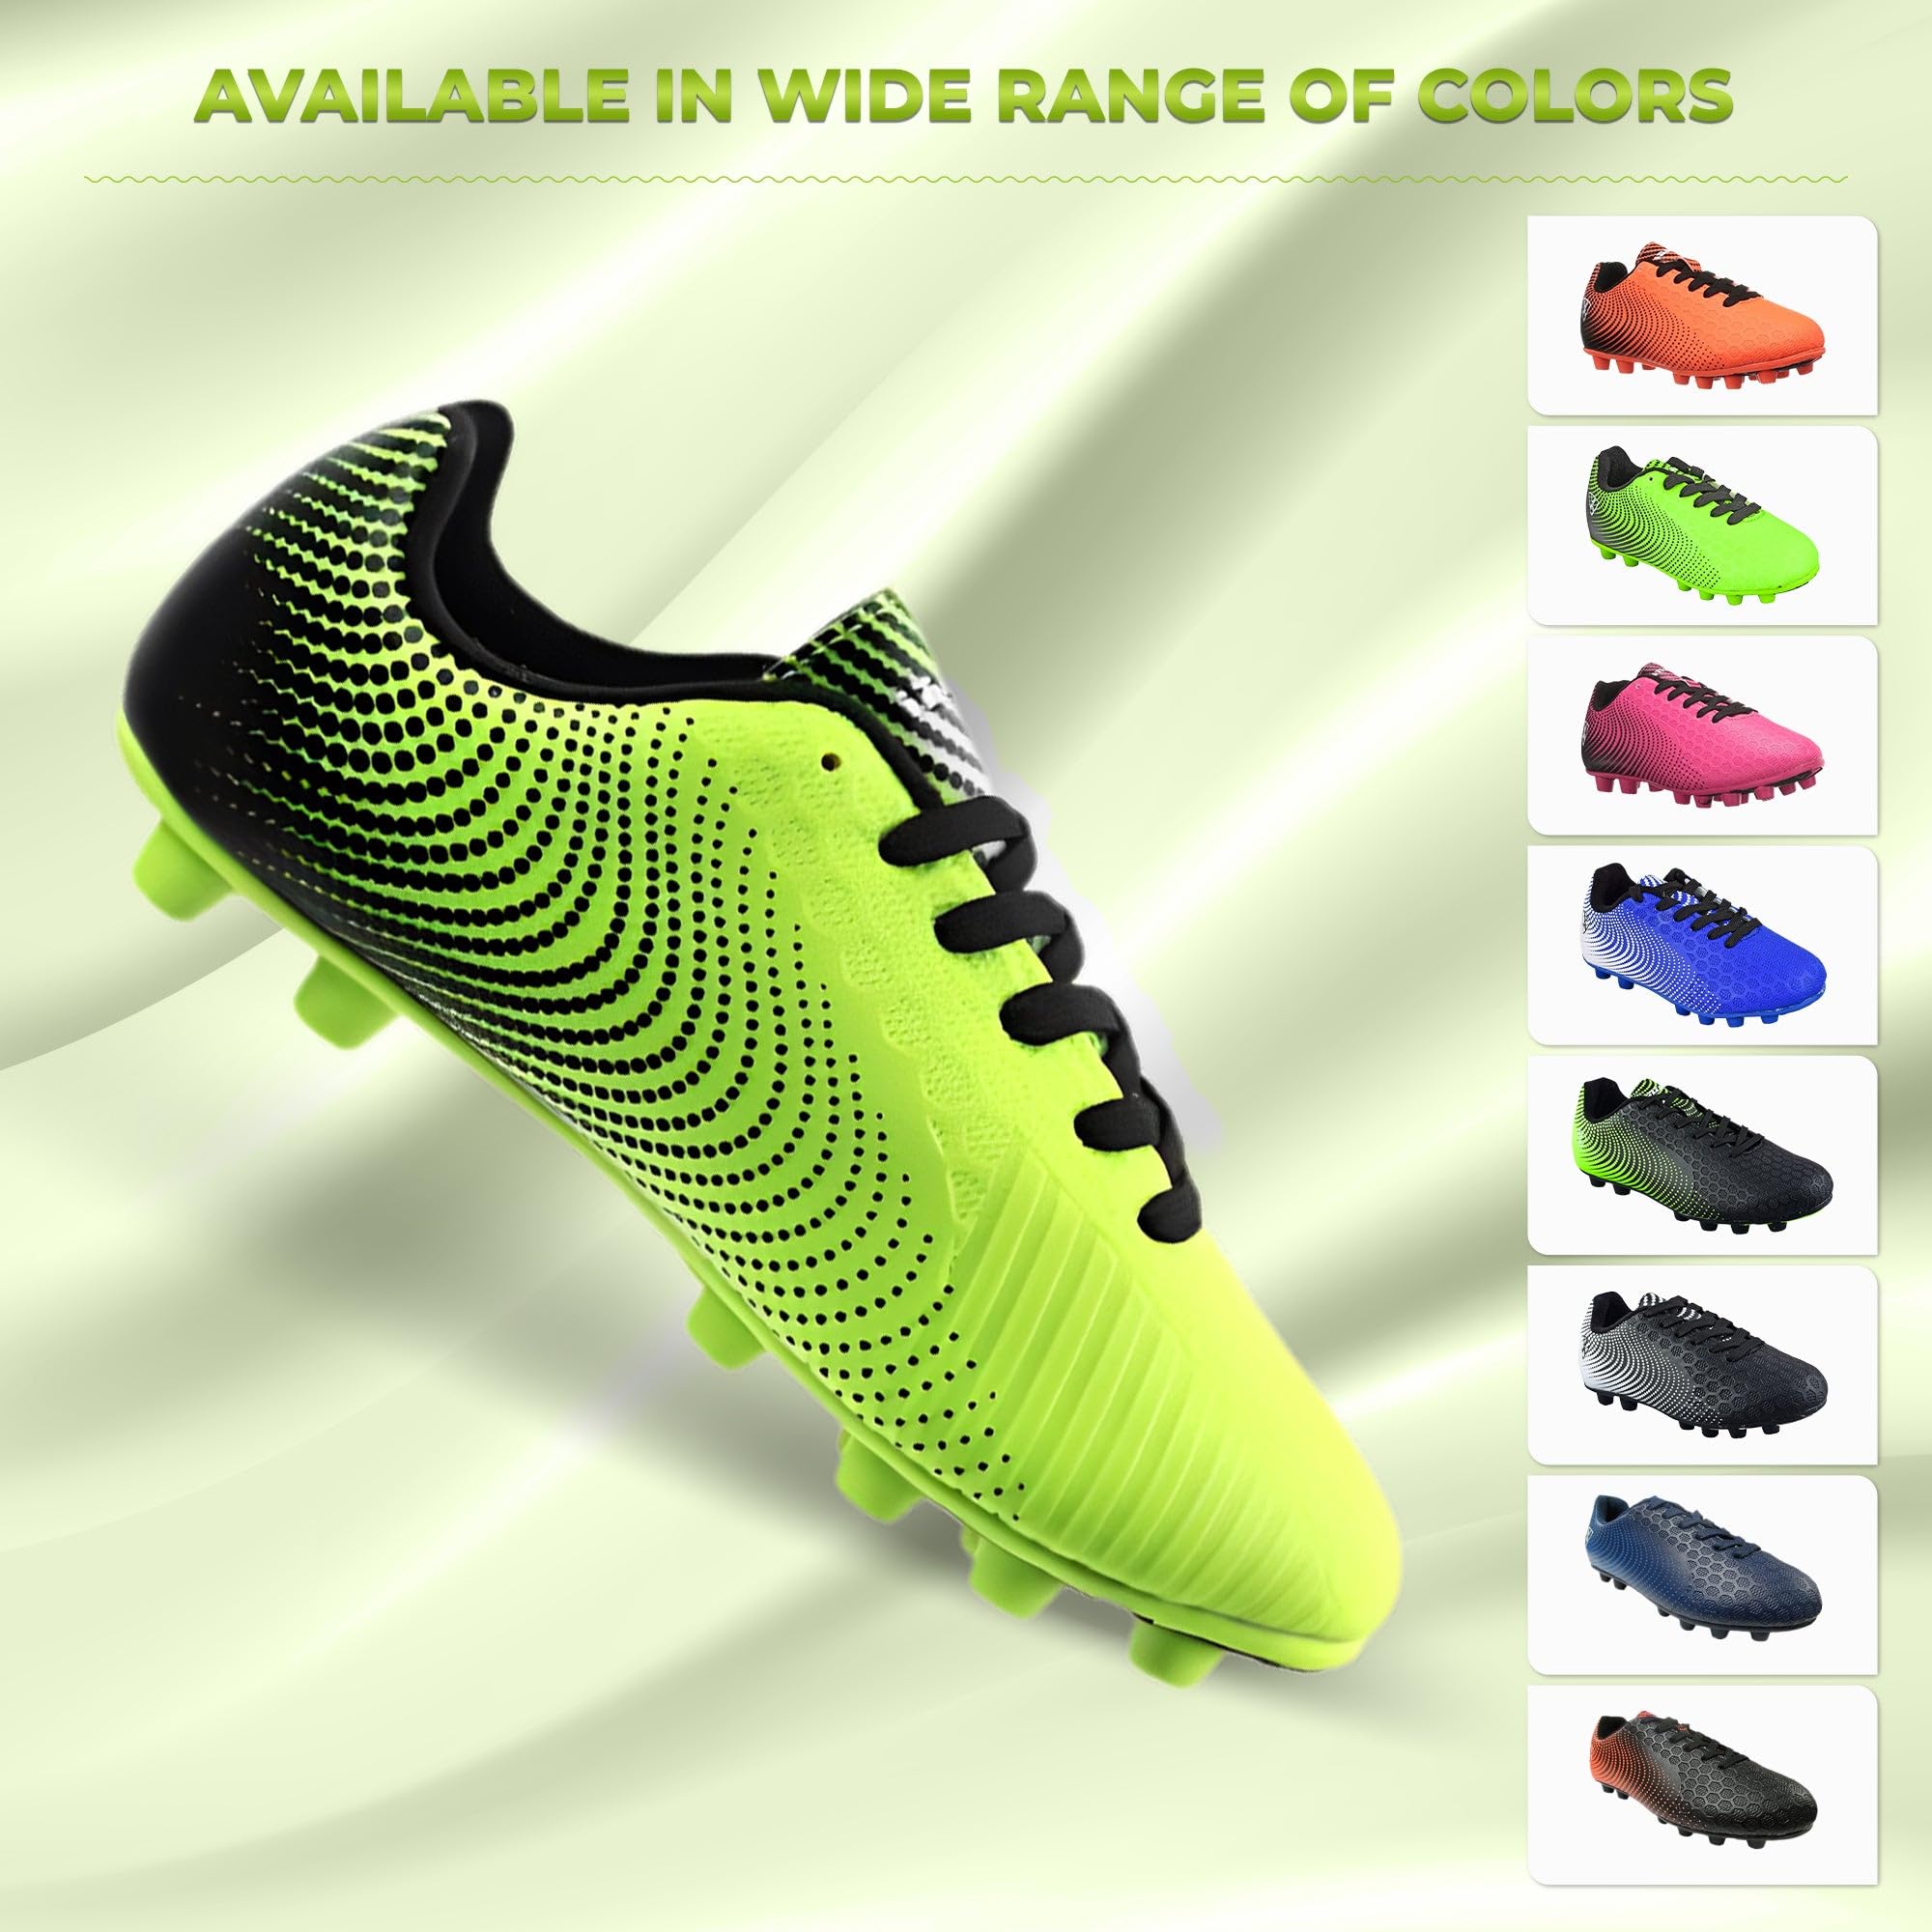 Vizari Unisex-Child Stealth Soccer-Shoes